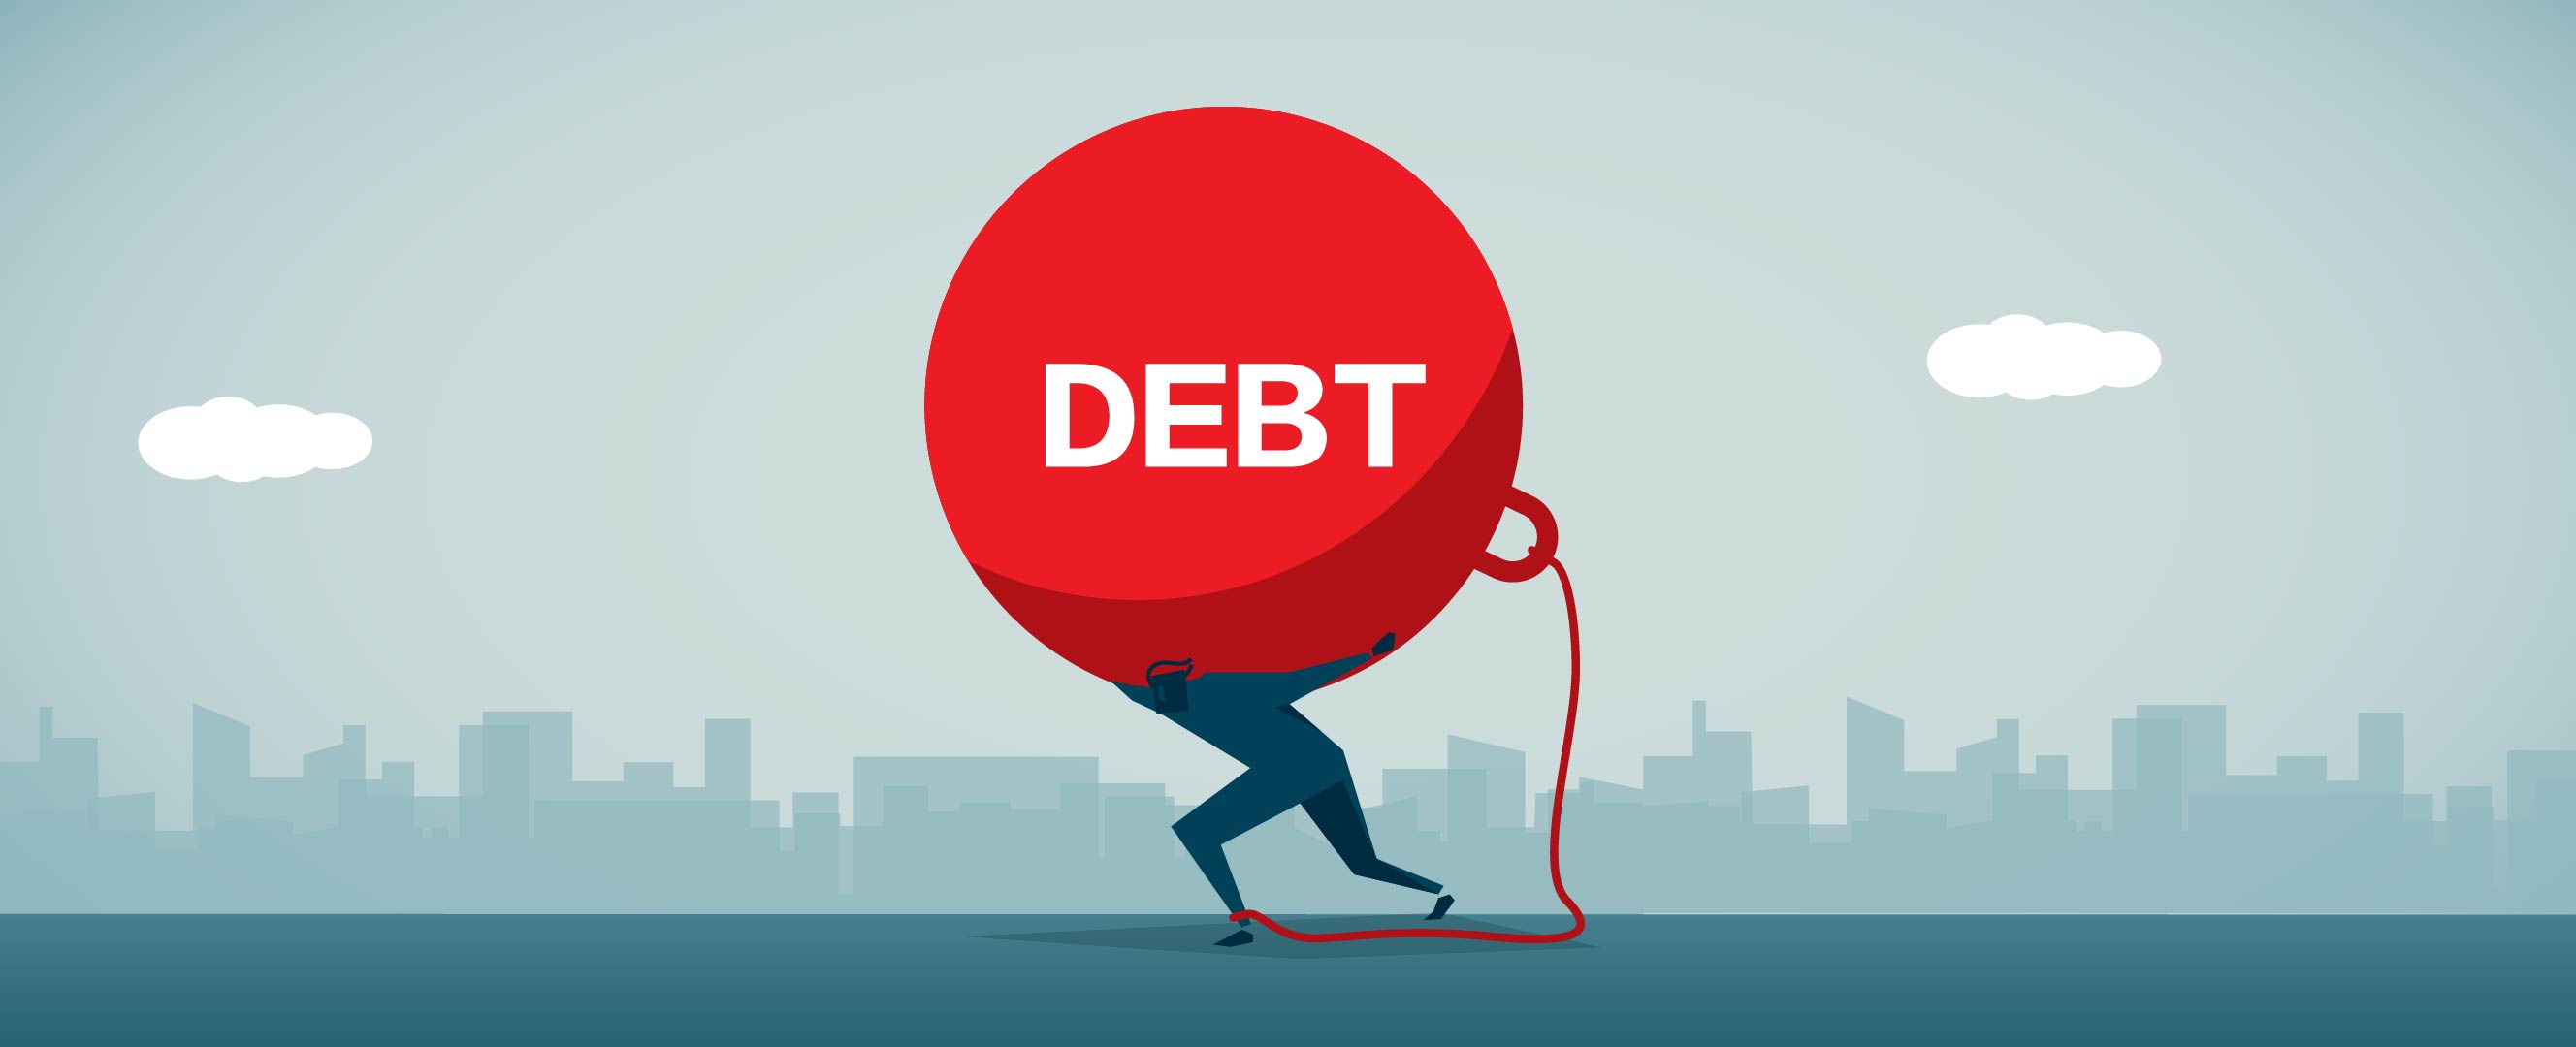 Deciding When Debt Becomes Unsafe